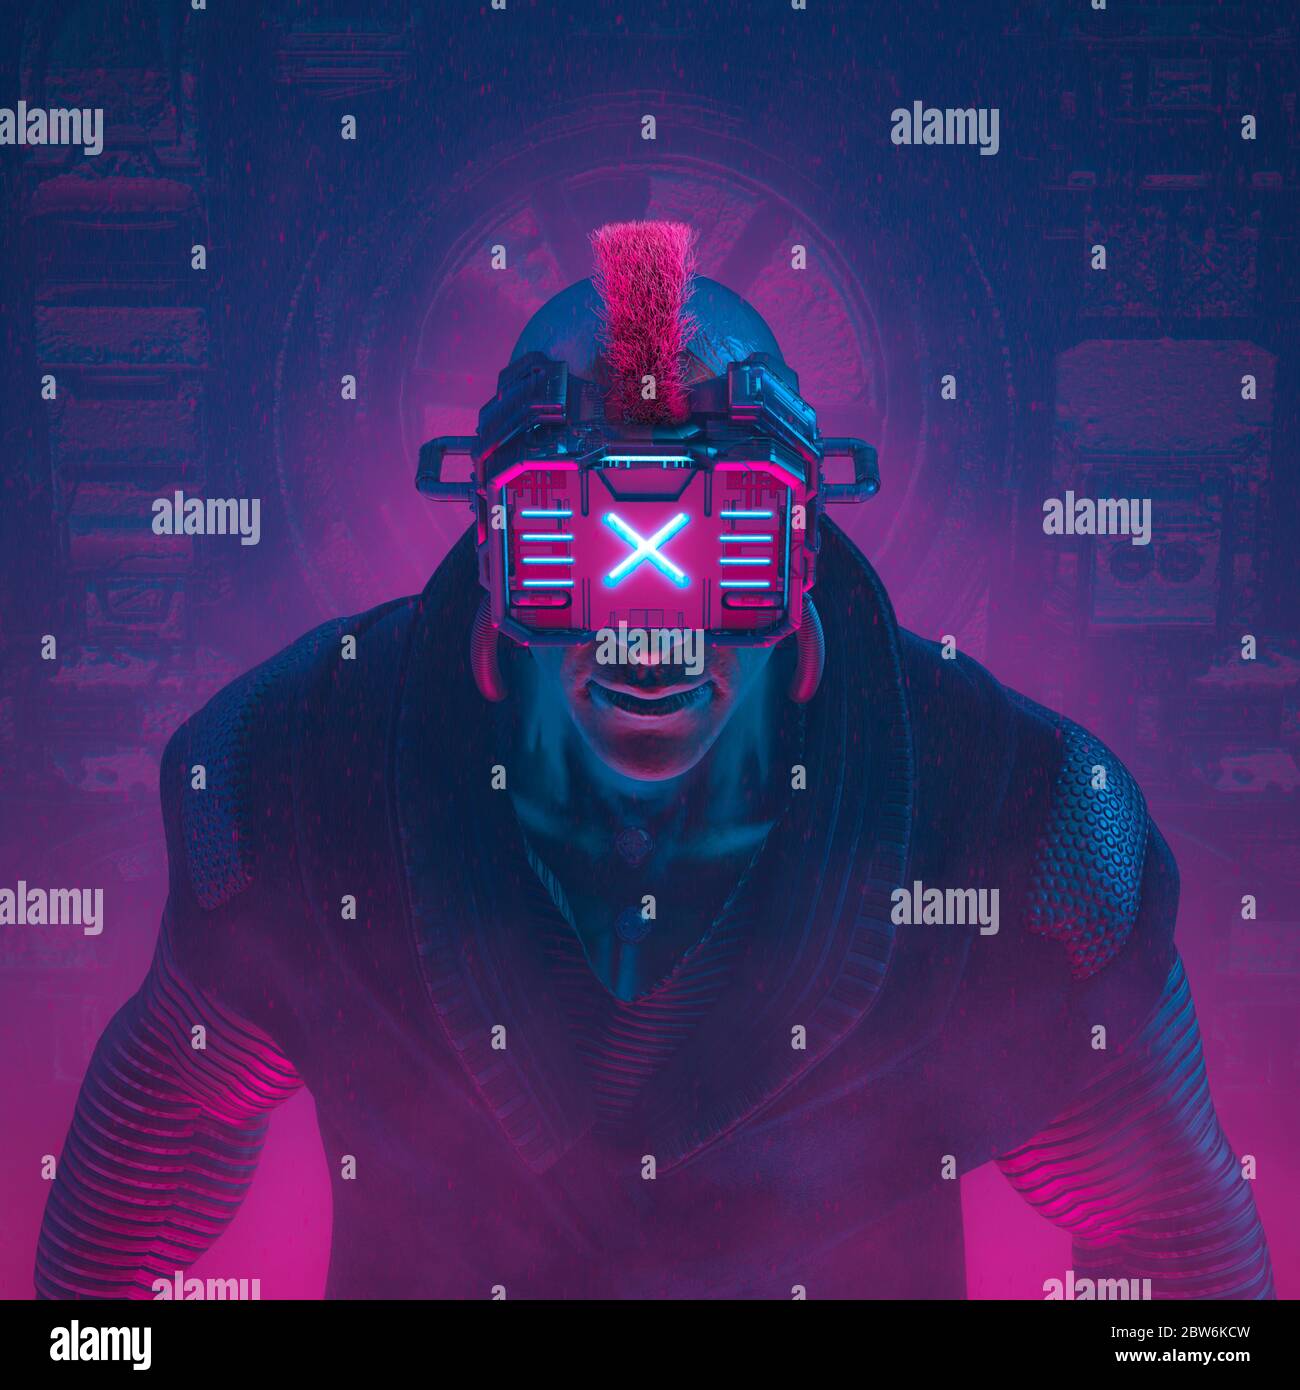 Cyberware hacker boss / 3D illustration of science fiction cyberpunk gangster character wearing futuristic glasses Stock Photo